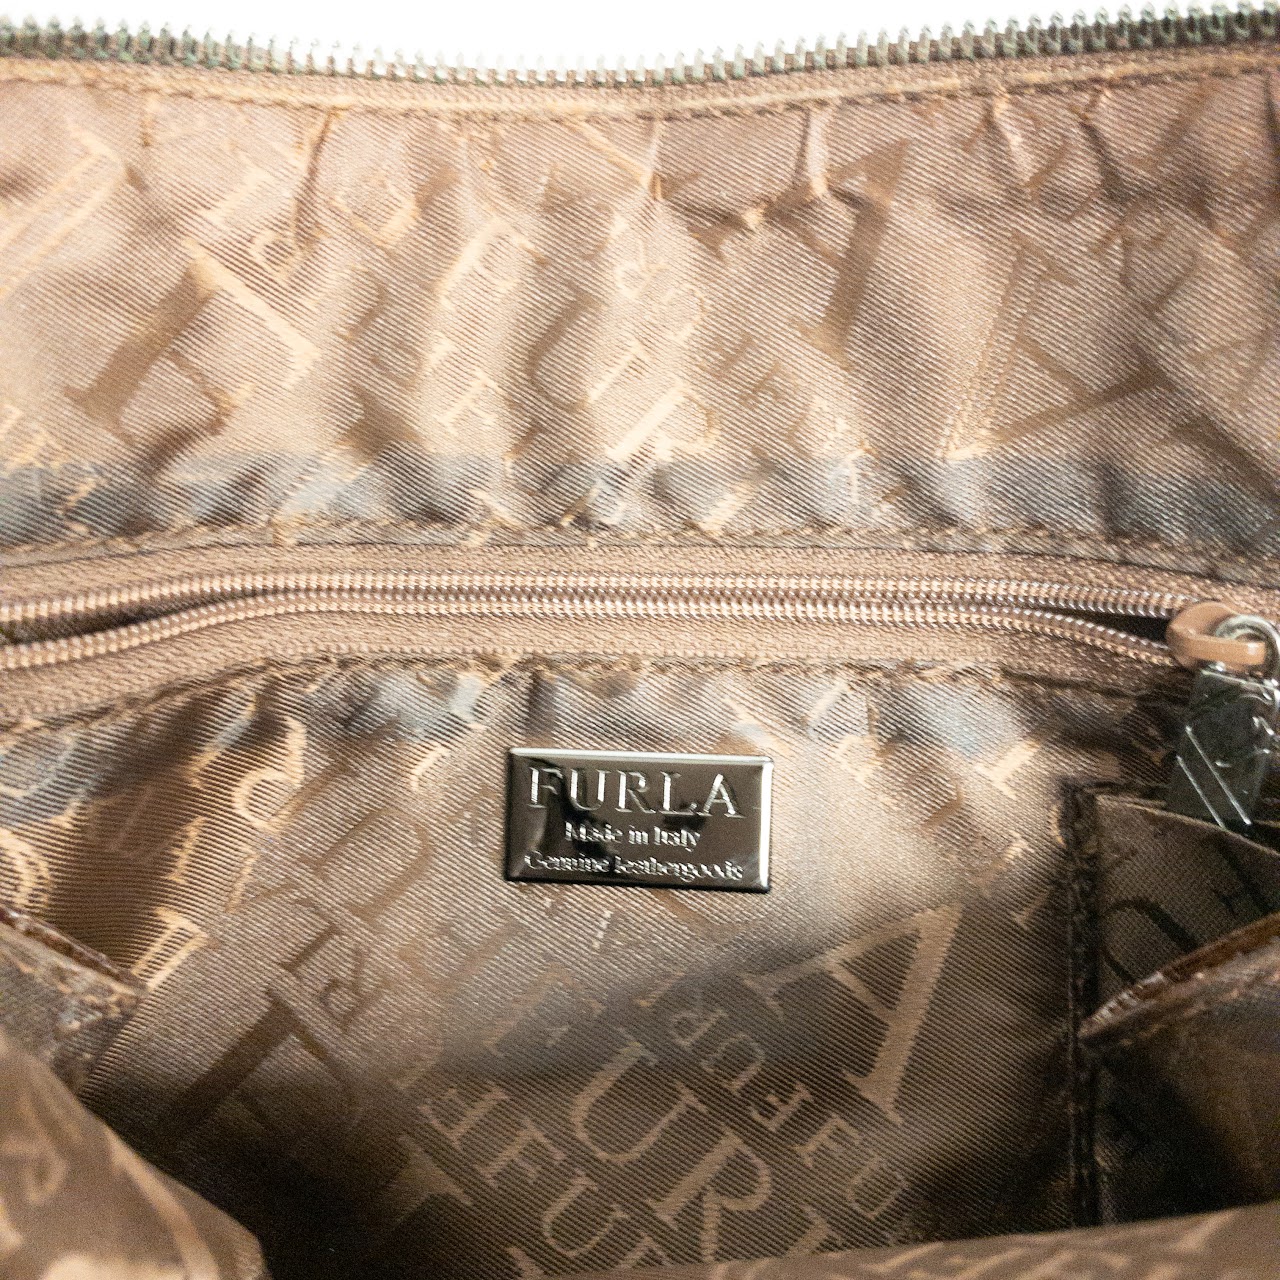 Furla Embossed Leather Bowling Bag